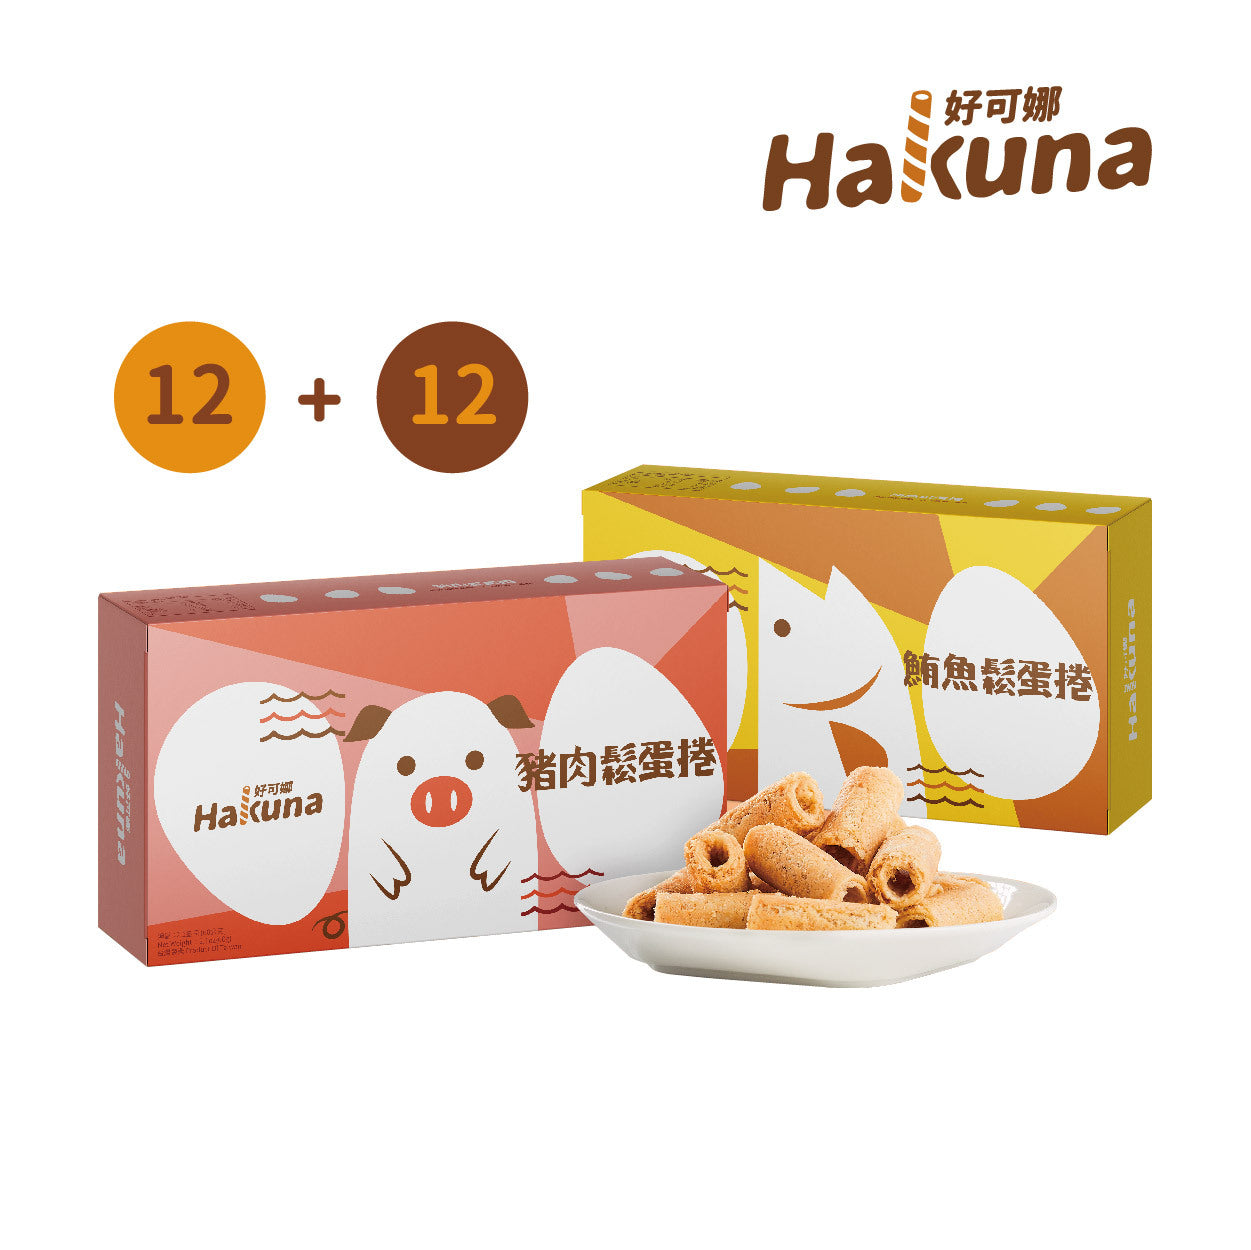 【Hakuna】Hakuna egg rolls 24 pieces (9 small pieces/box)